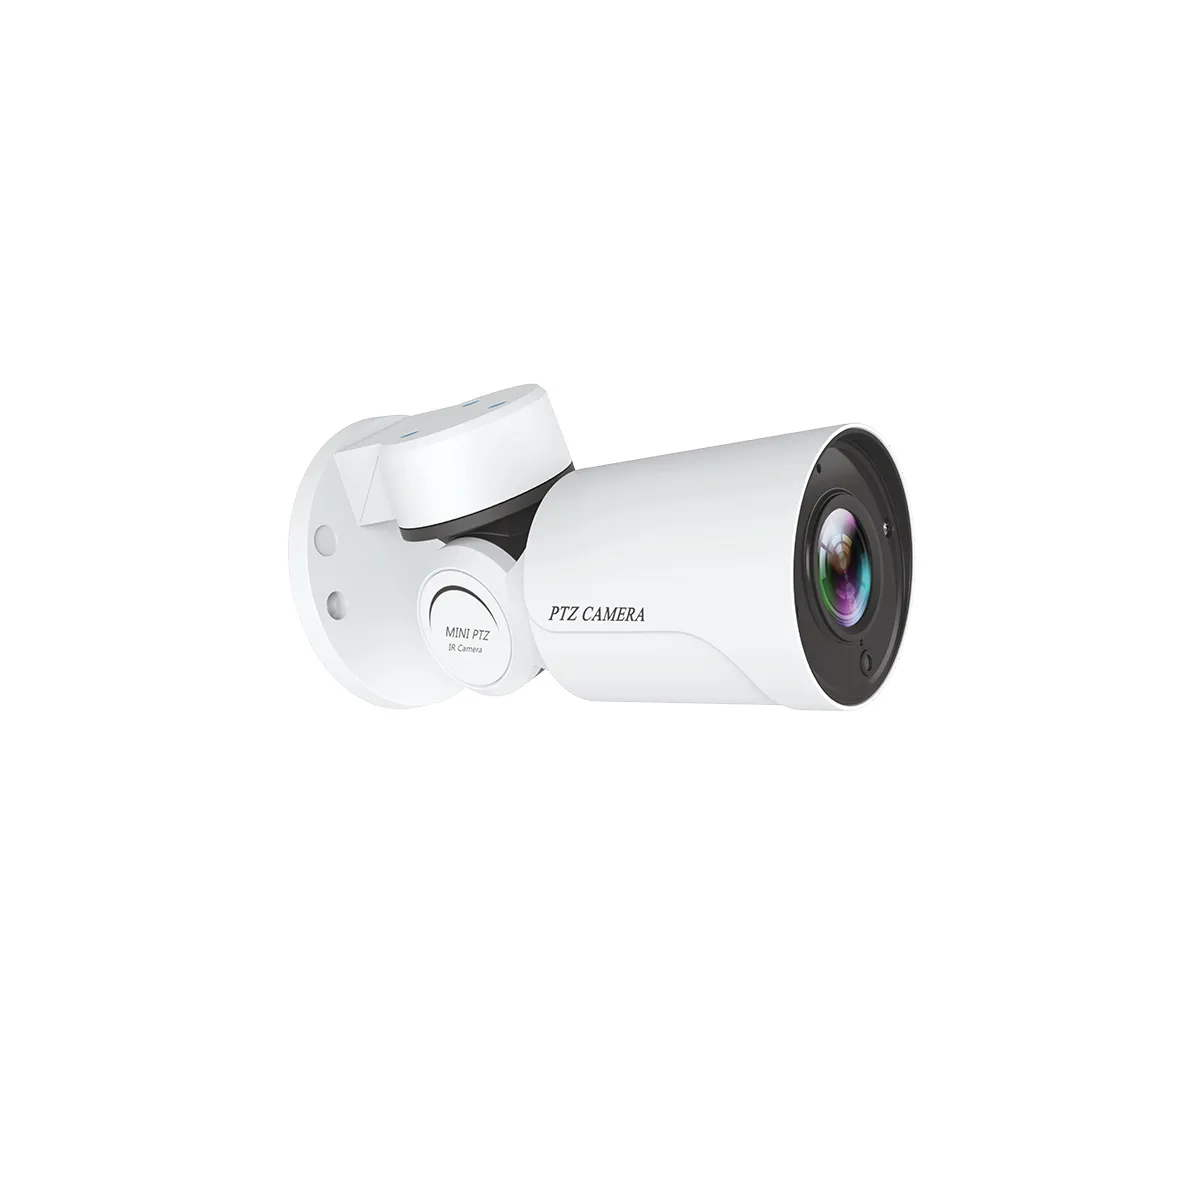 Oem 6mp 4x optical zoom mini bullet ptz poe ip camera with two way audio 2.8-12mm motorized 30m ir ai human & vehicle detection